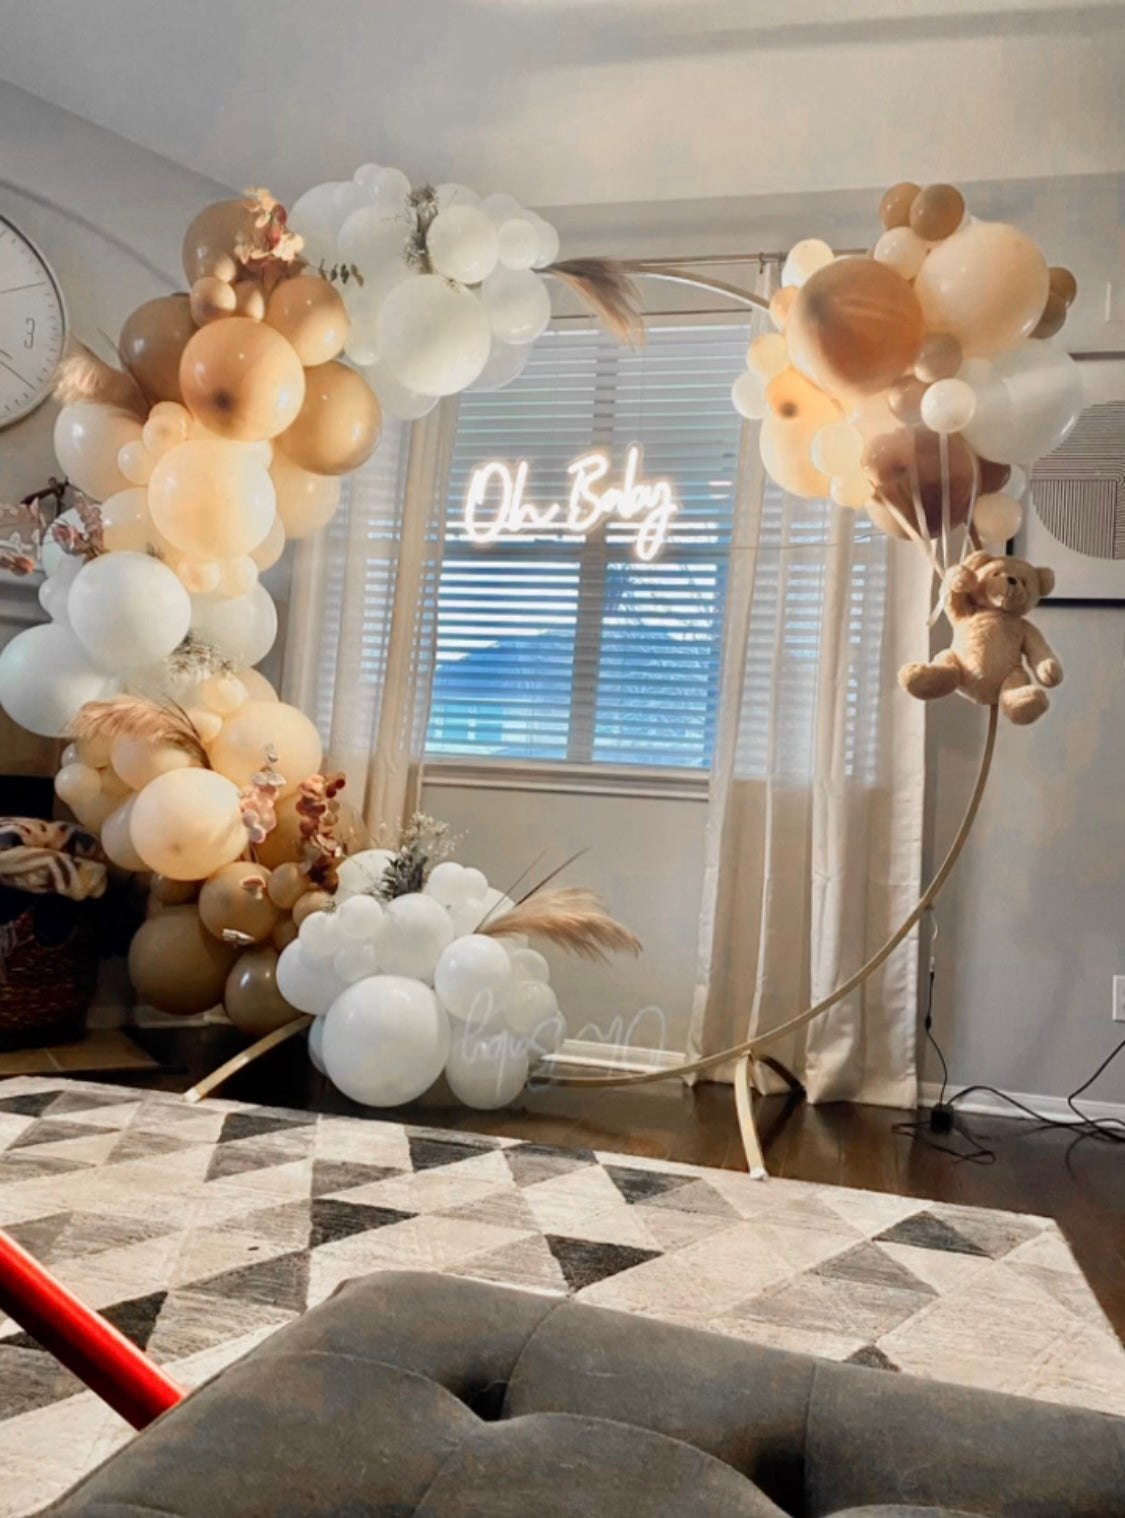 Can Bearly Wait DIY Balloon Arch Garland Kit | Muted Beige Tan Blush Neutral | Teddy Bear Gender Reveal Birthday Baby Shower Balloon Decor